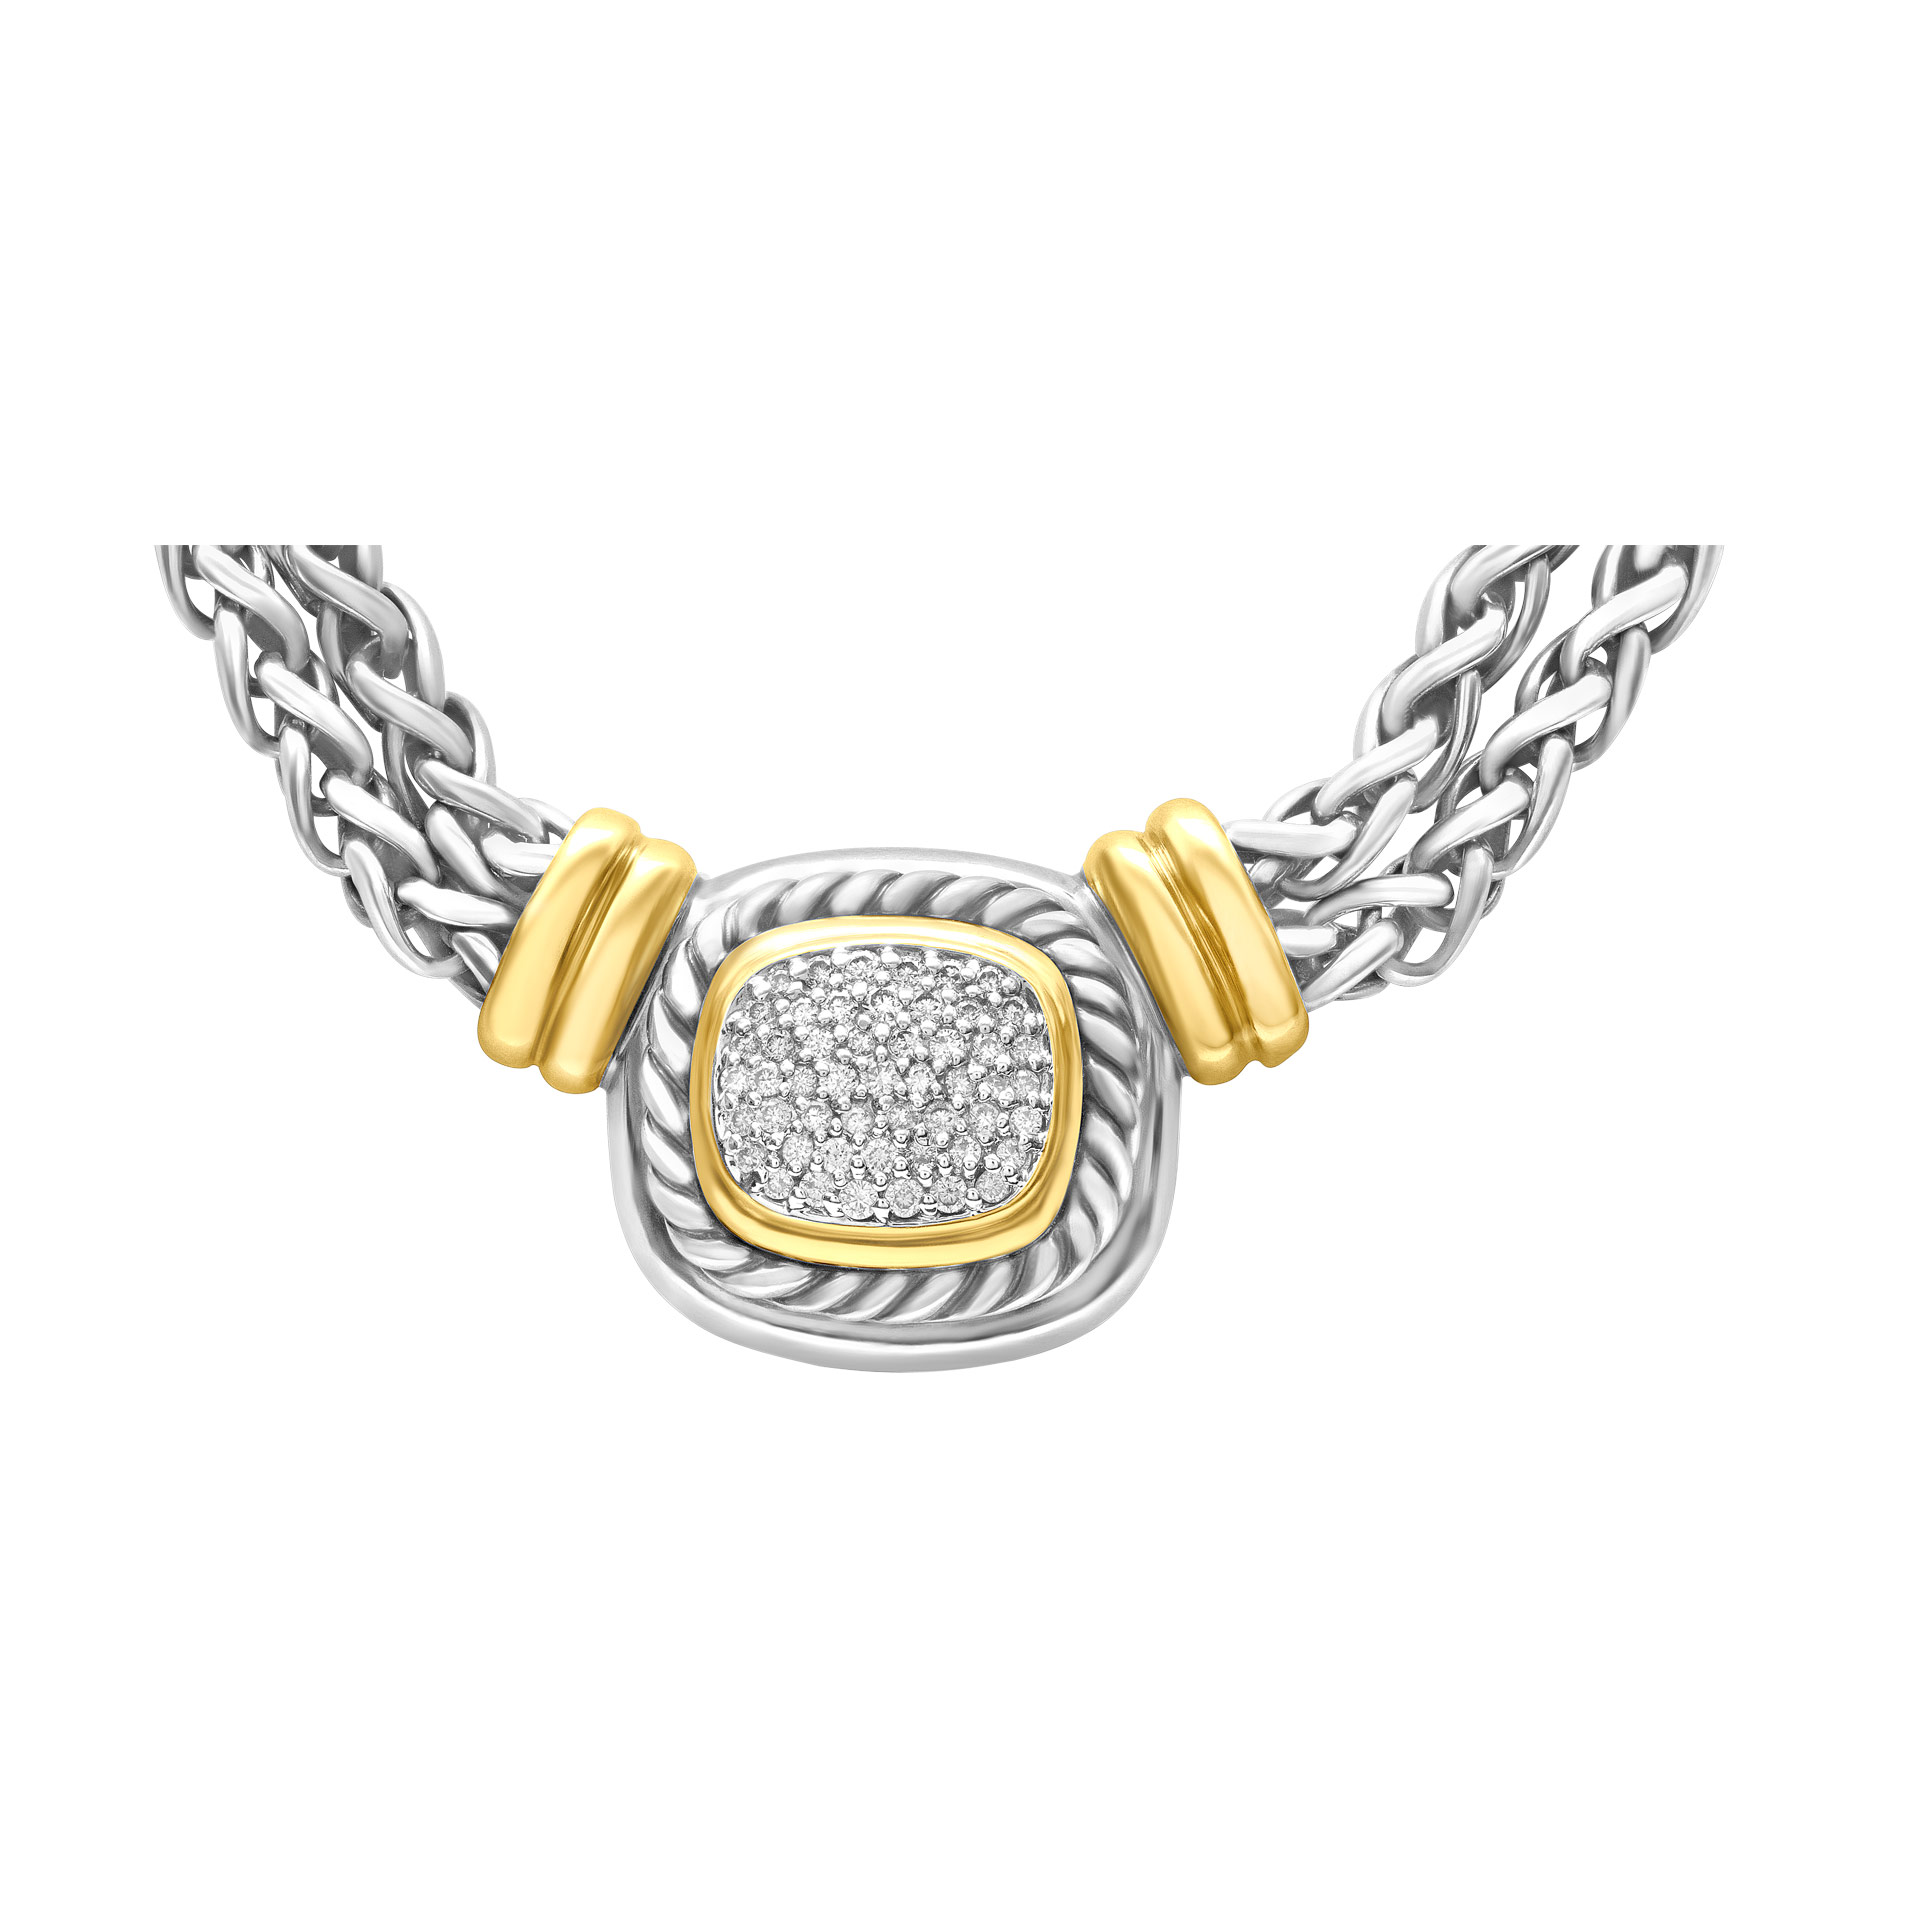 Modern David Yurman necklace with diamond pendant.